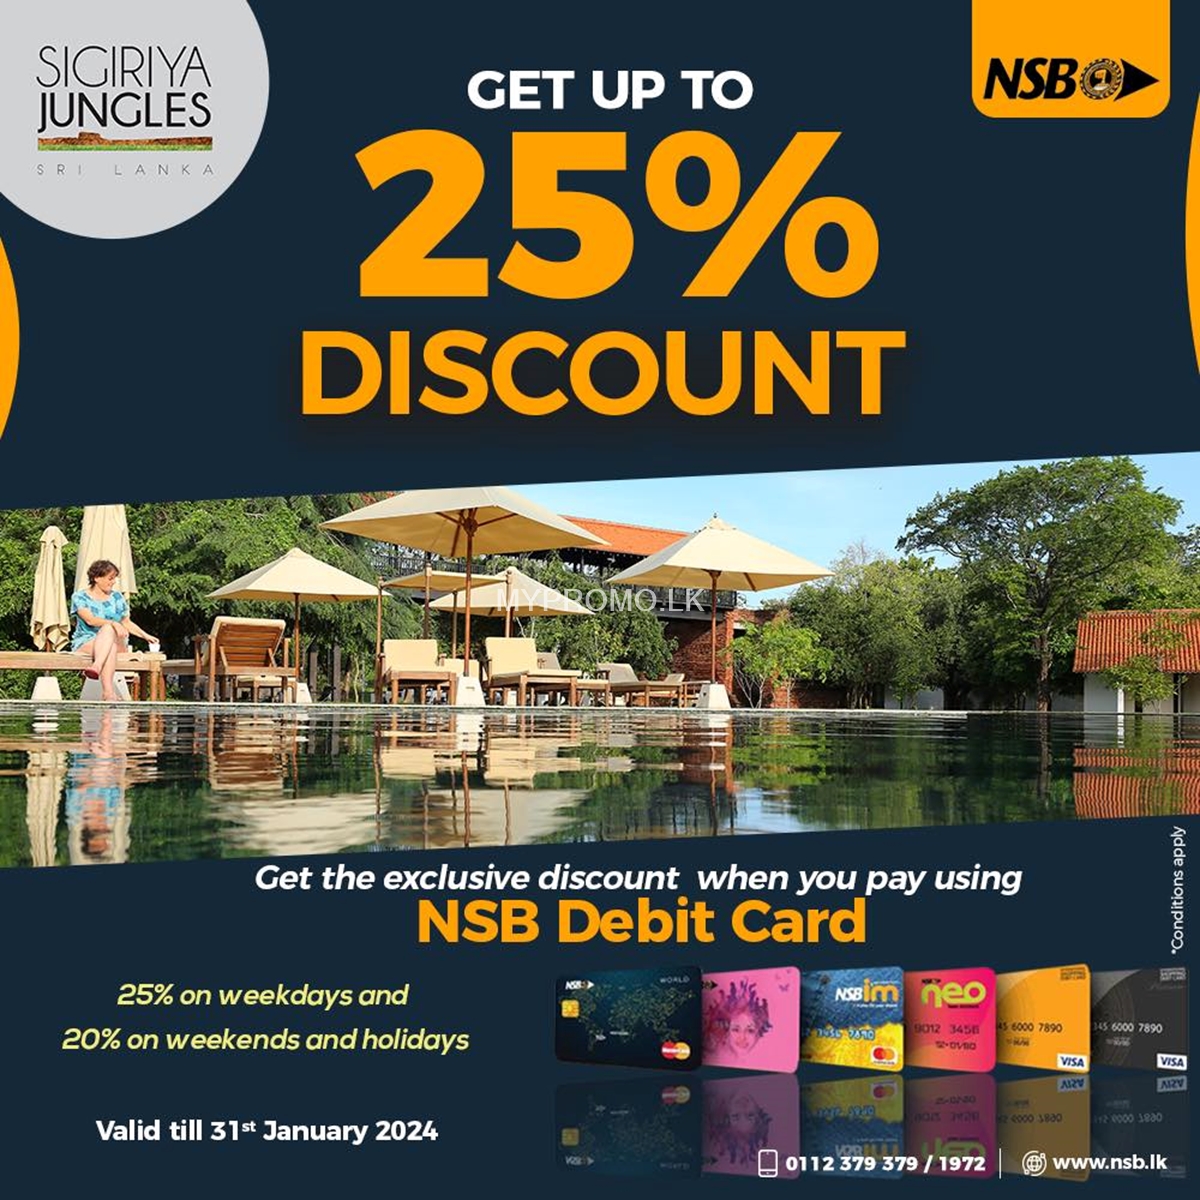 Enjoy up to 25% off at Sigiriya Jungles with NSB Debit Card